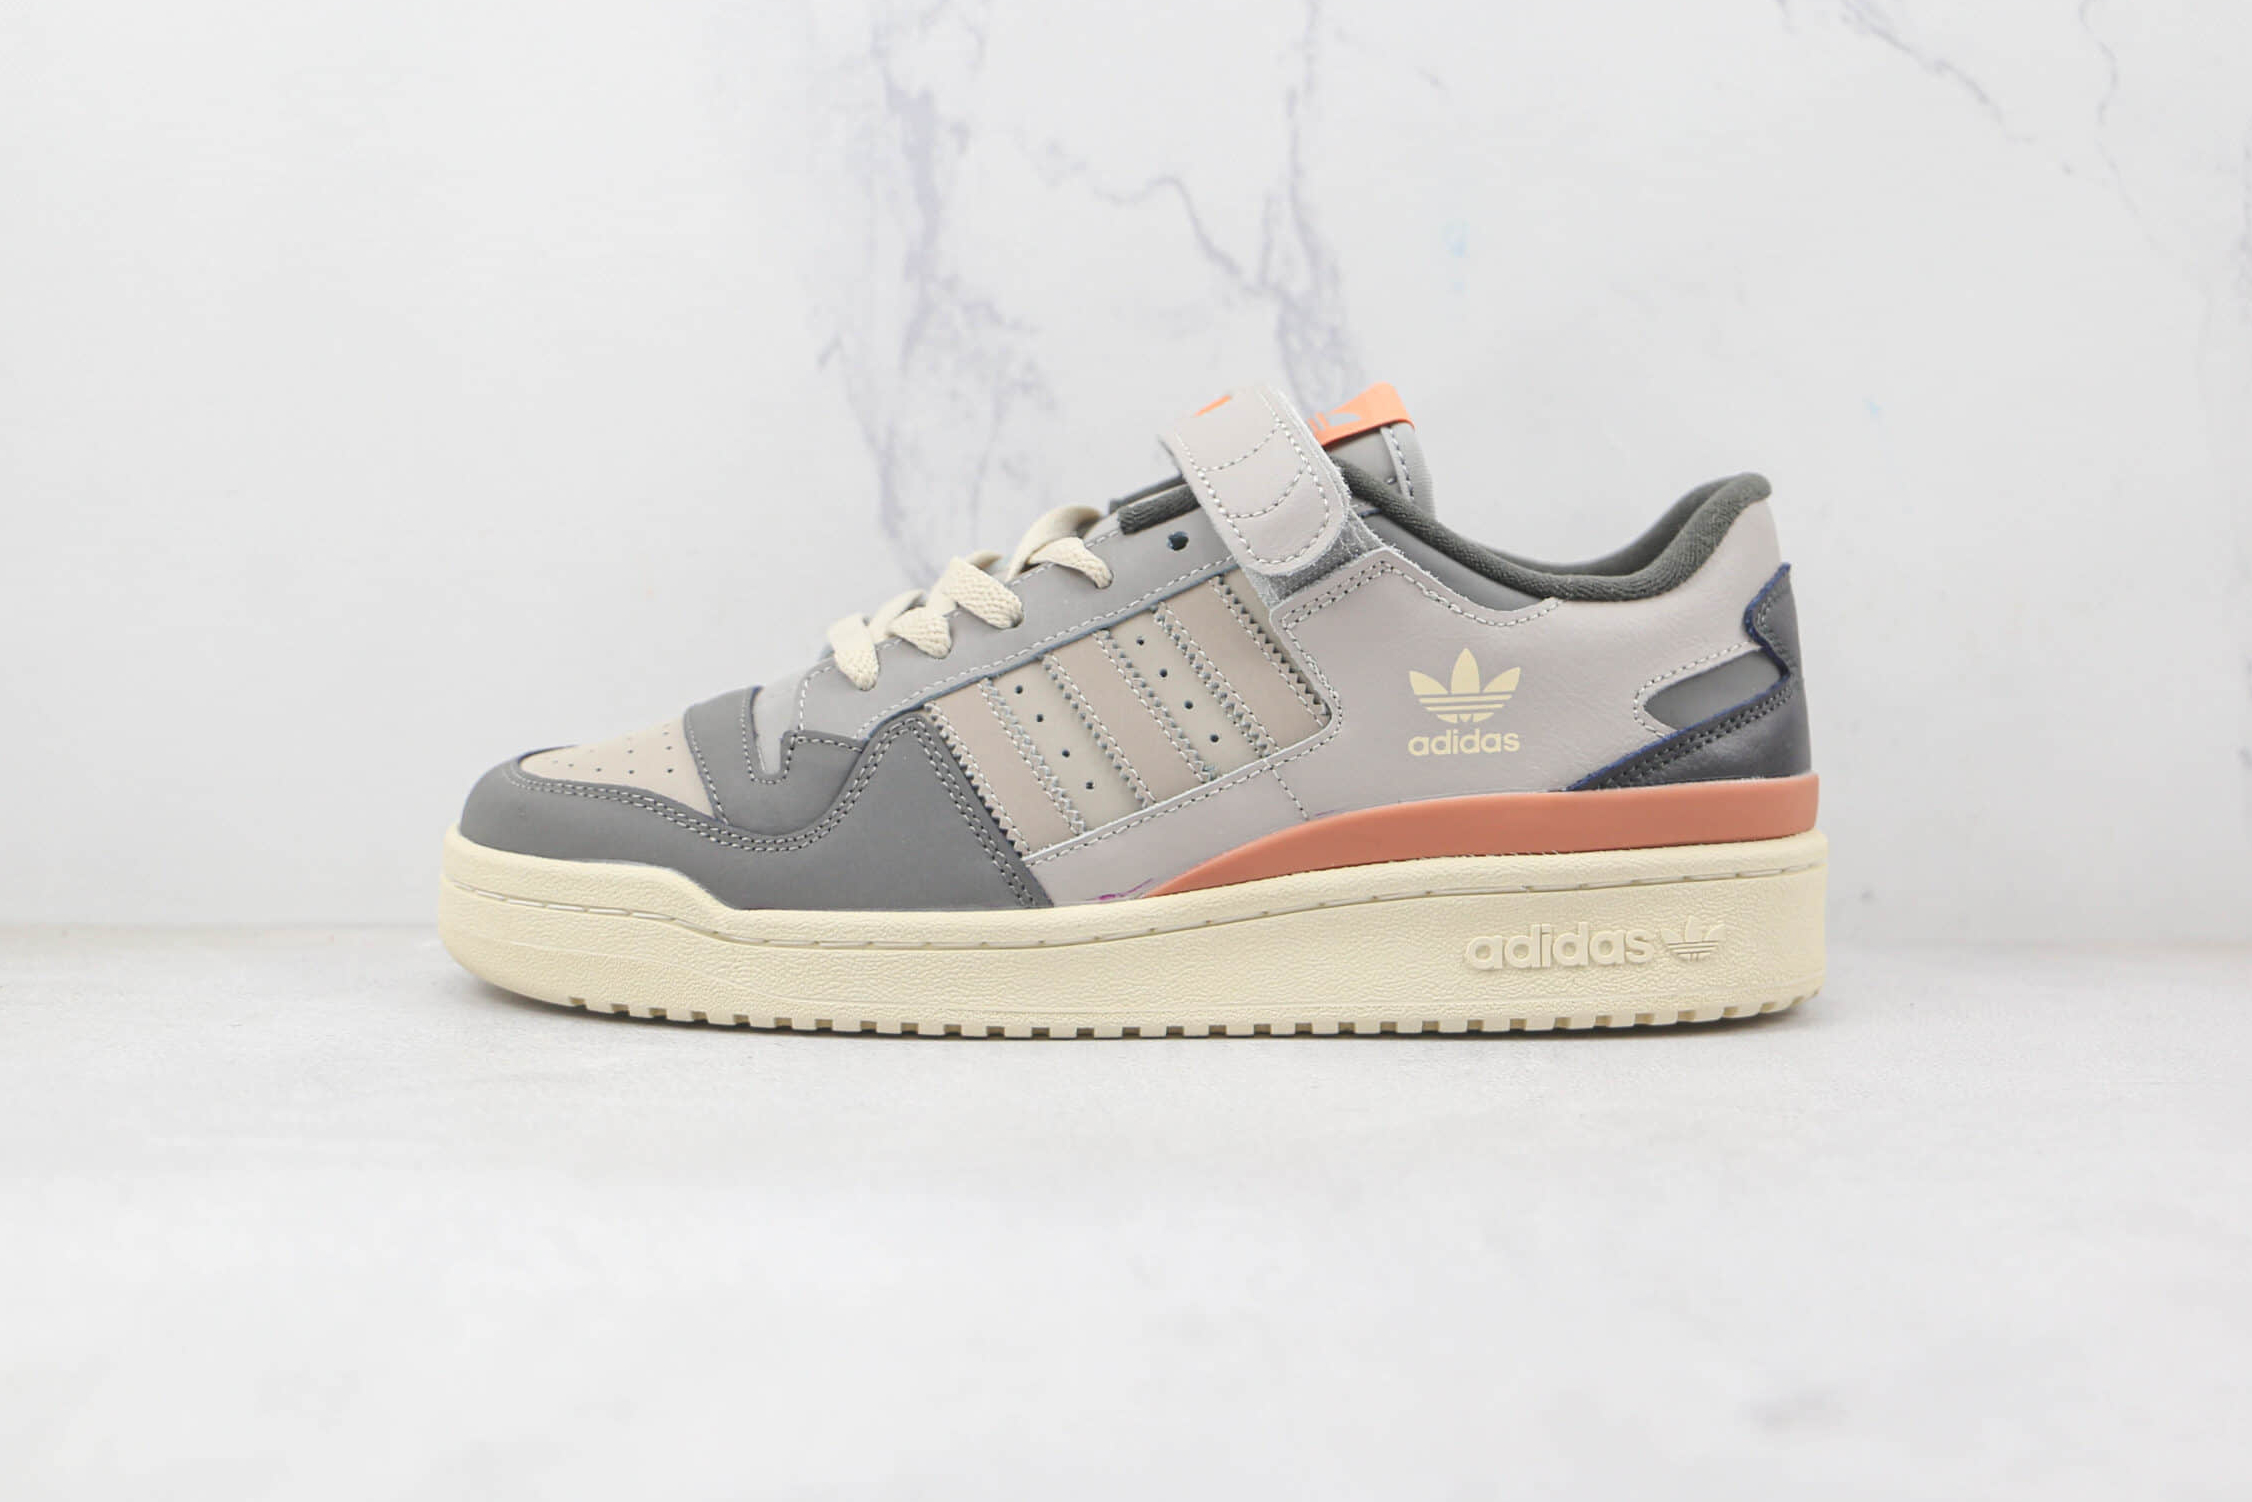 Adidas Originals Forum 84 Low GX4576 - Sleek and Stylish Sneakers